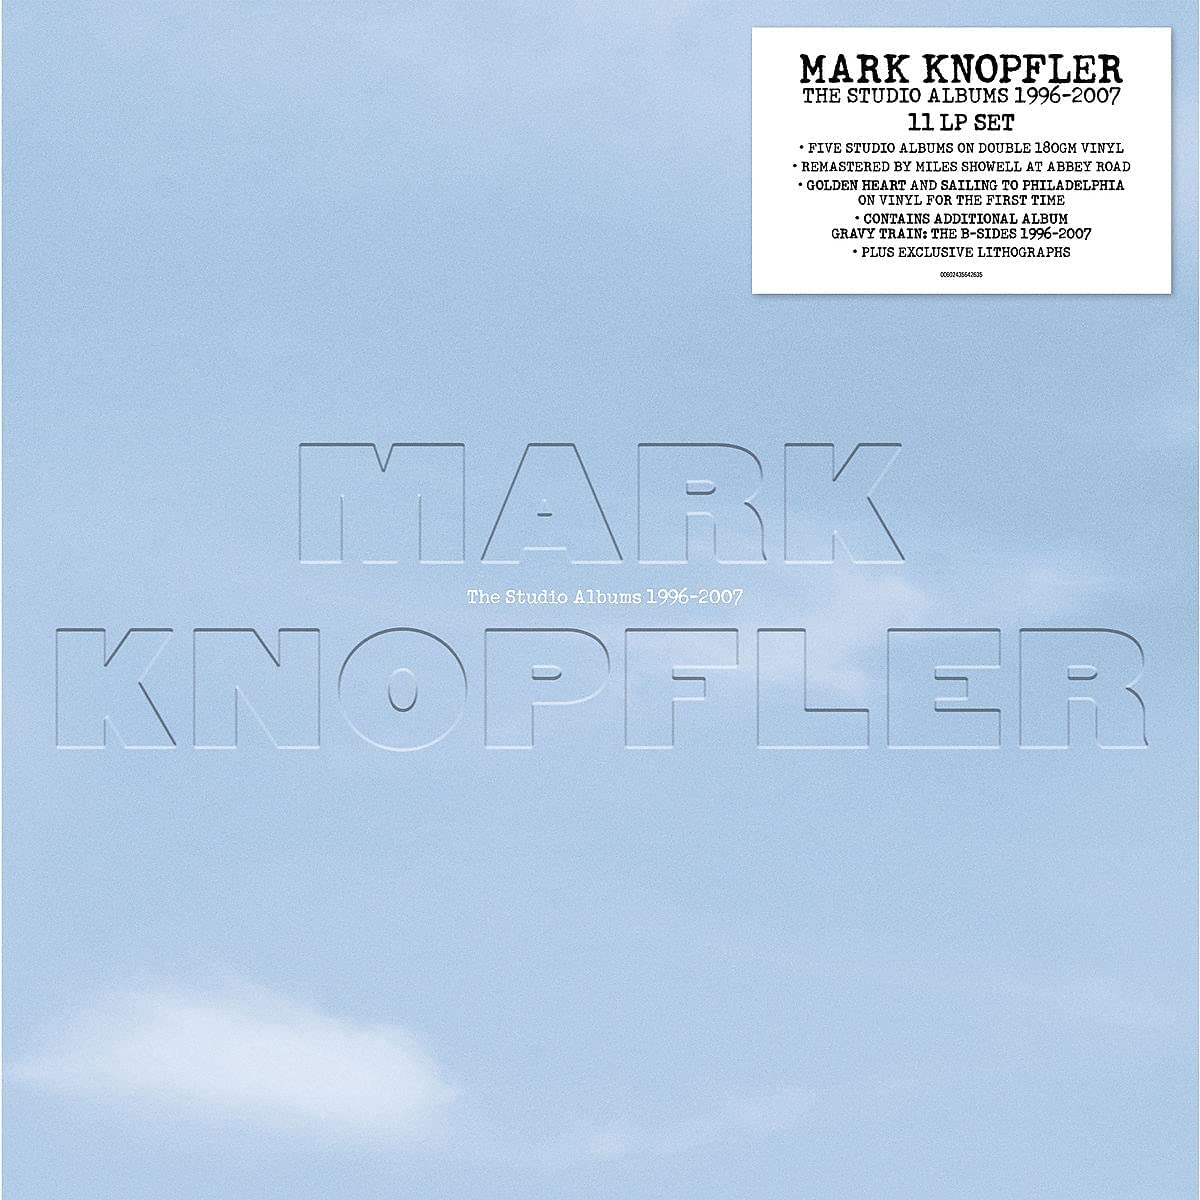 Mark Knopfler: The Studio Albums 1996-2007 - Vinyl Box Set | Mark Knopfler